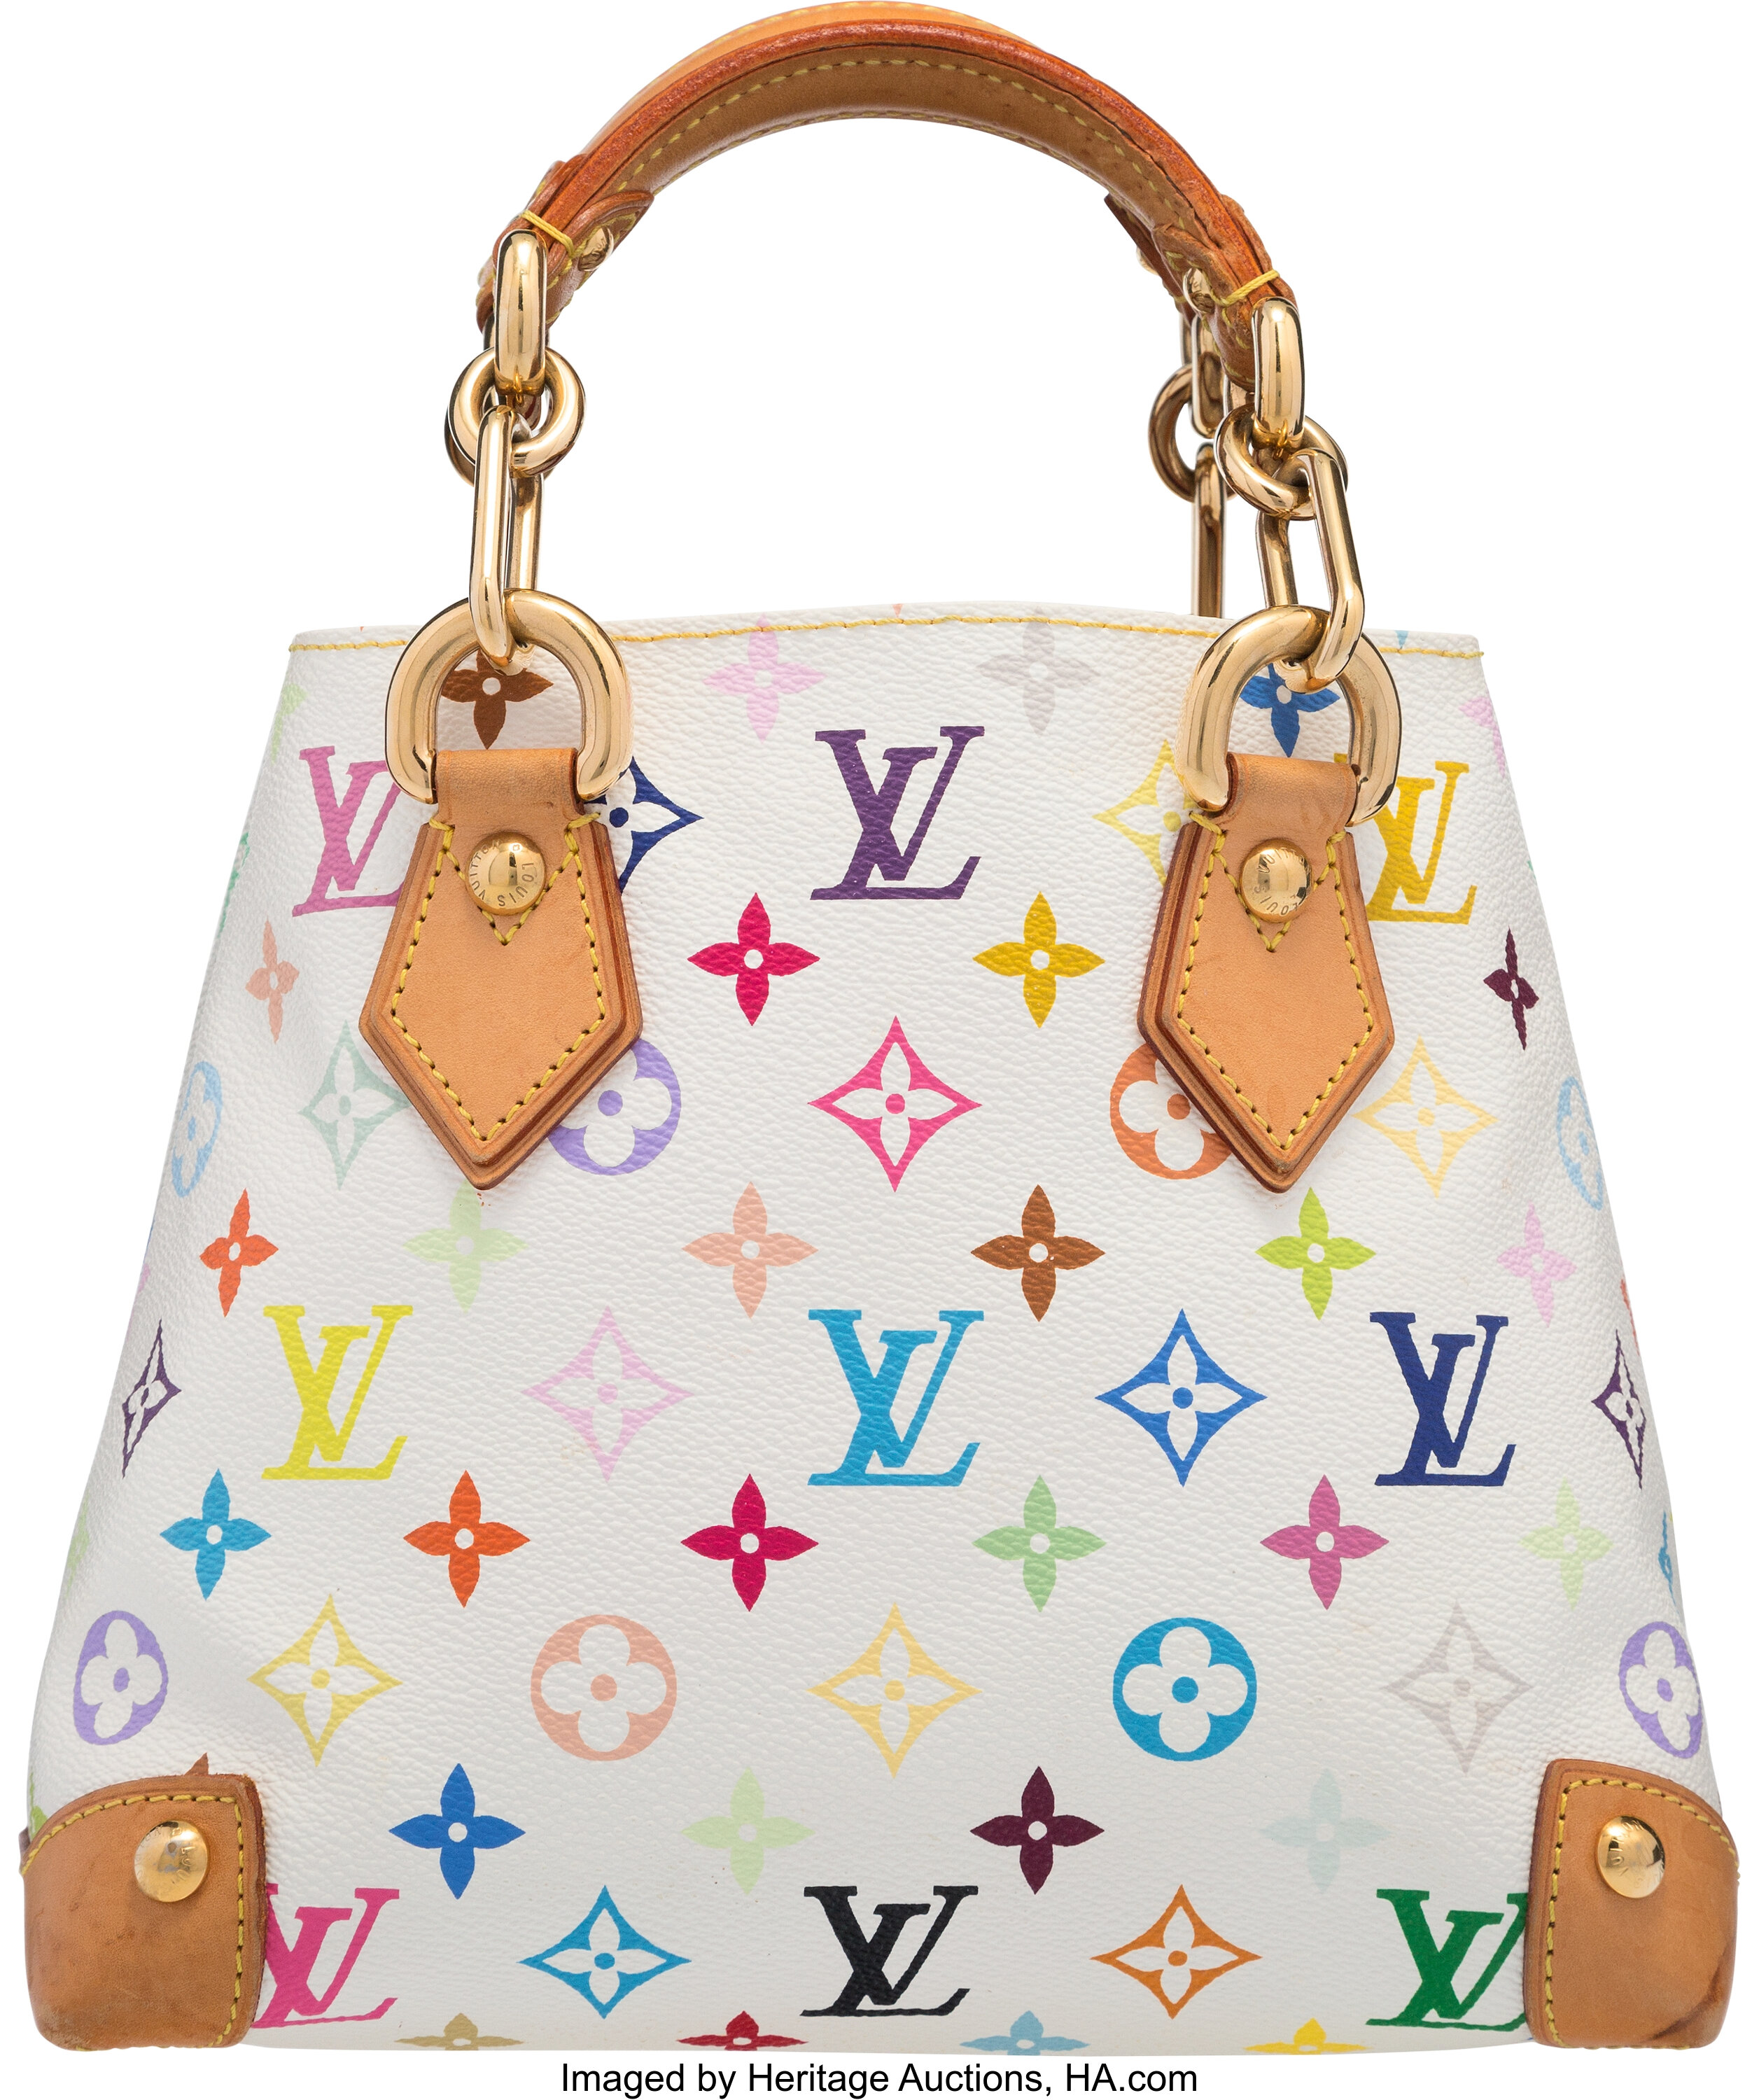 Luxury Handbag Unboxing & Reveal, Louis Vuitton Audra